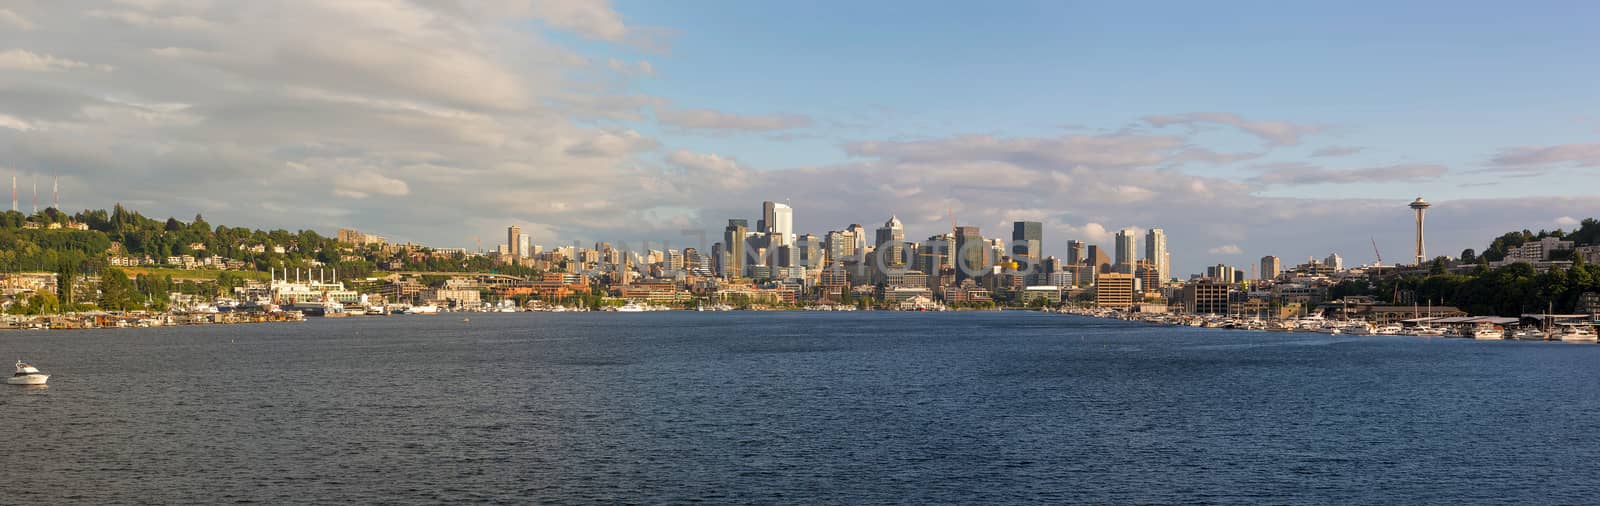 Seattle City Skyline along Lake Union by Davidgn